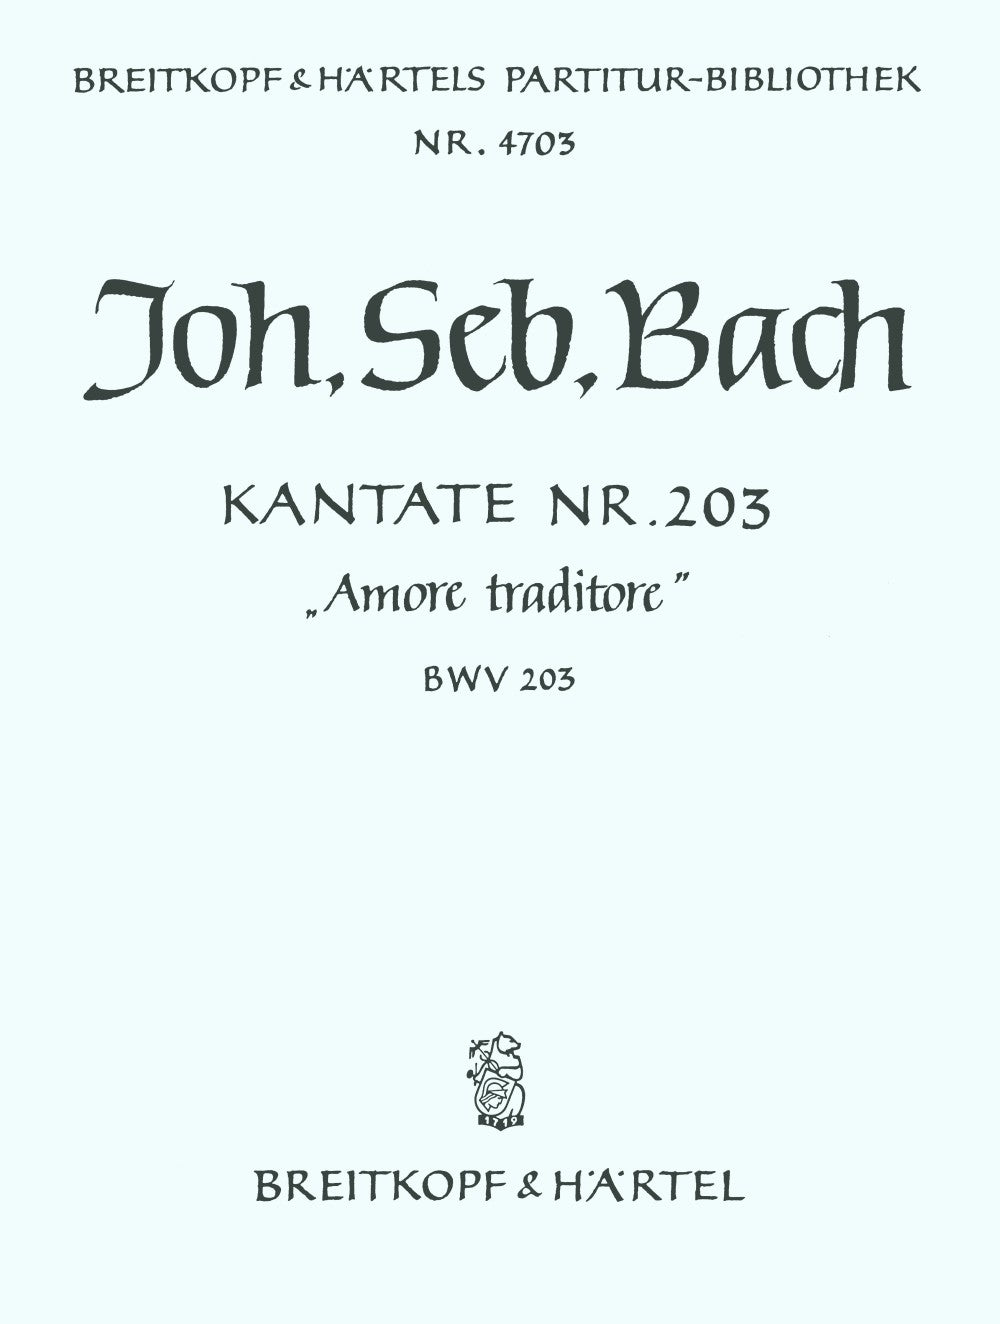 Bach: Amore traditore, BWV 203